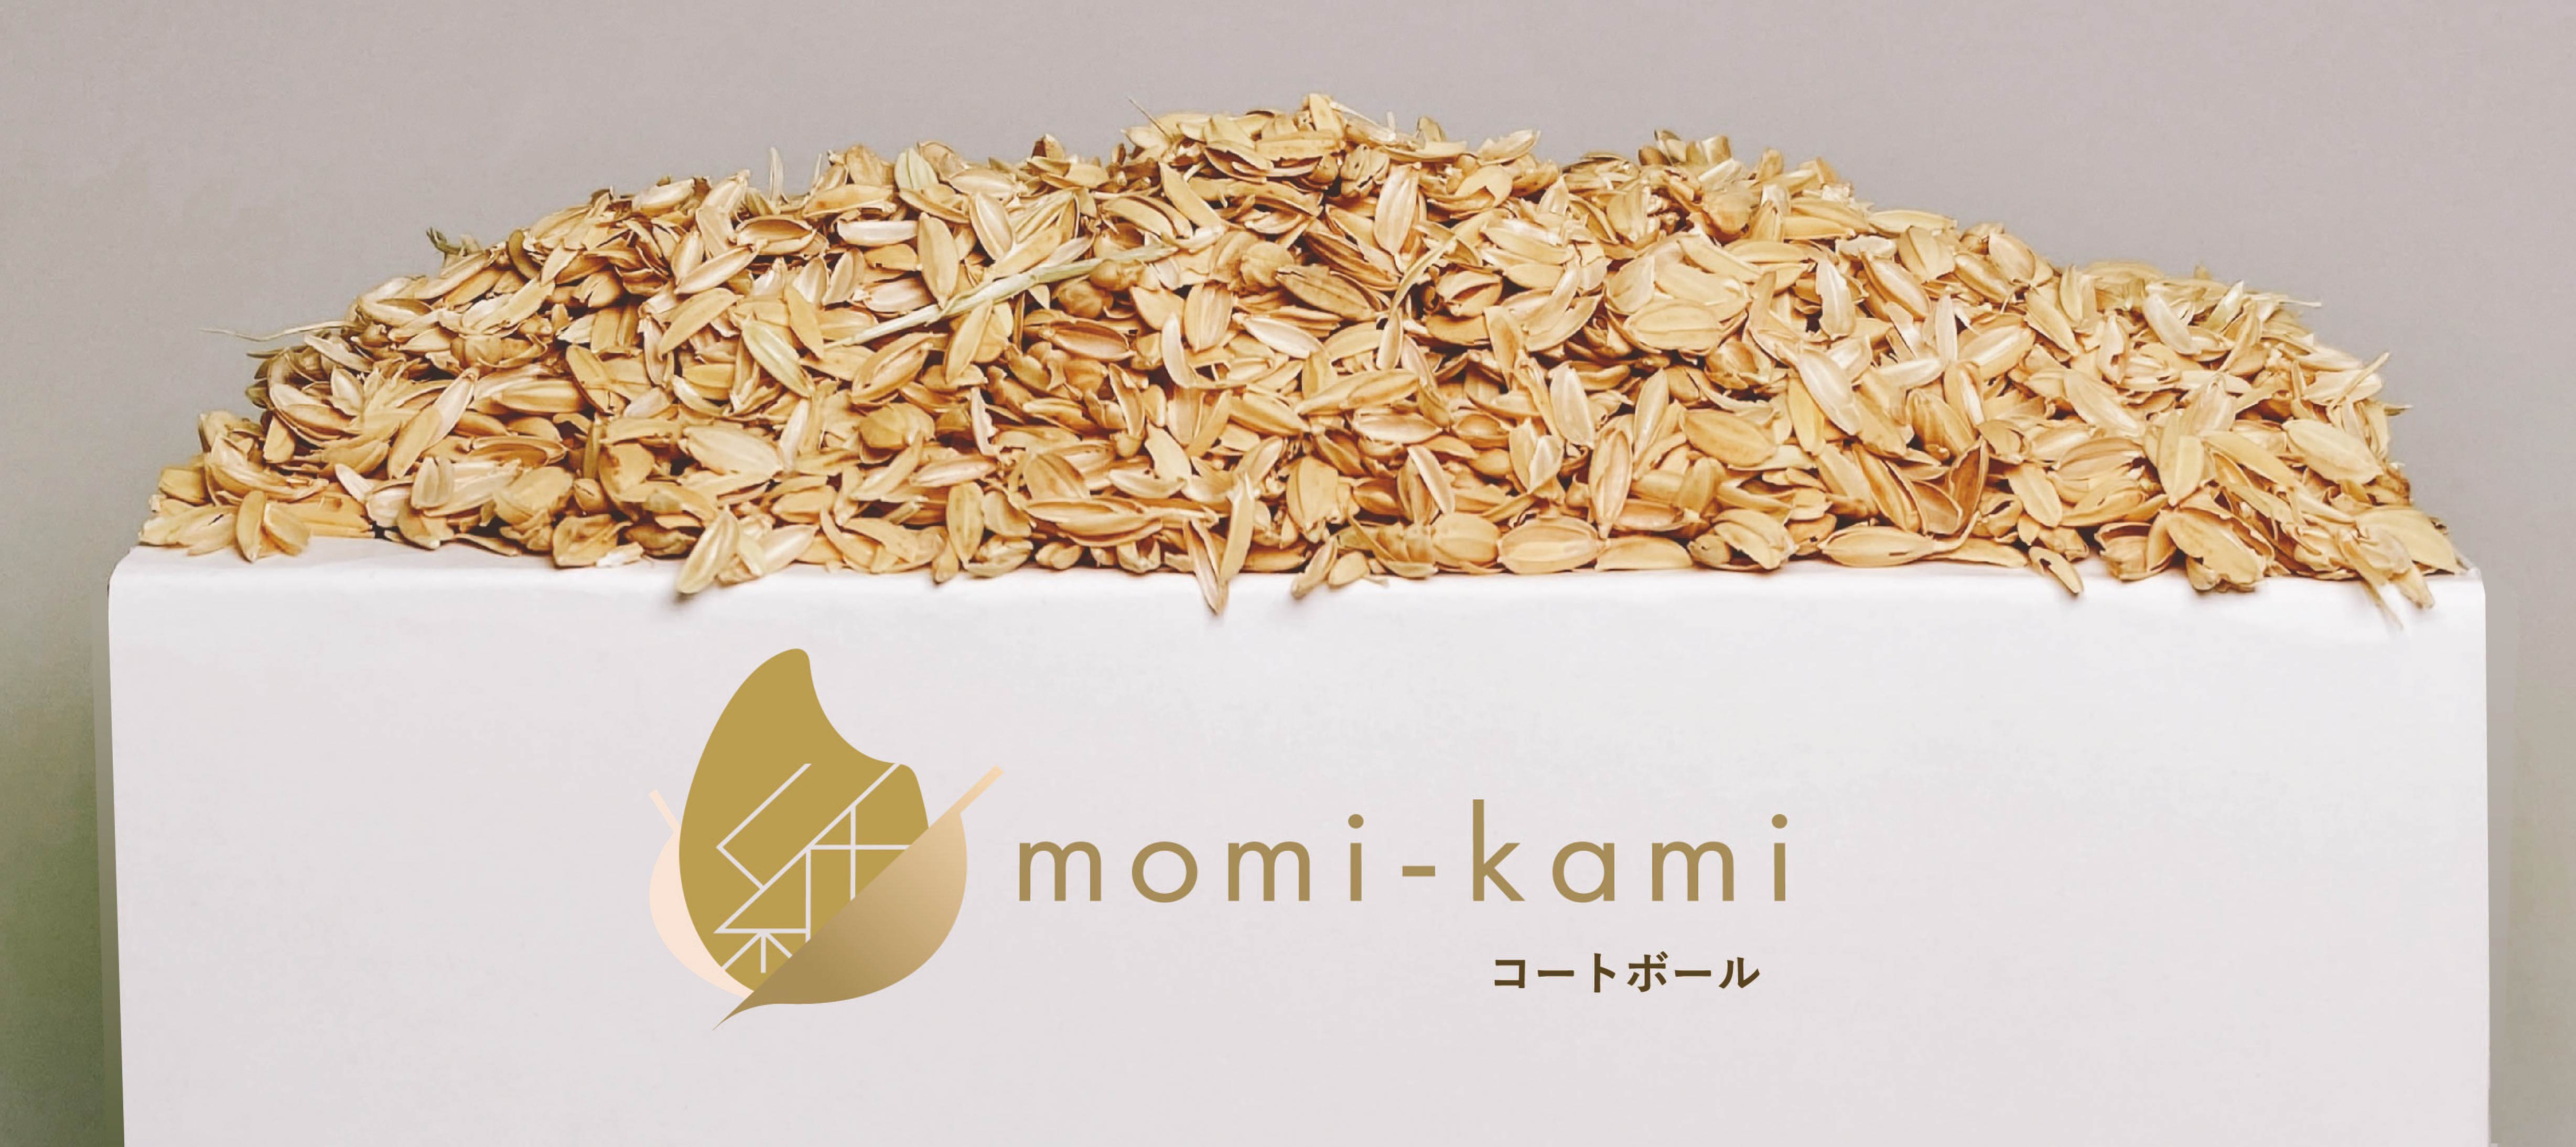 momi-kamiの商品画像